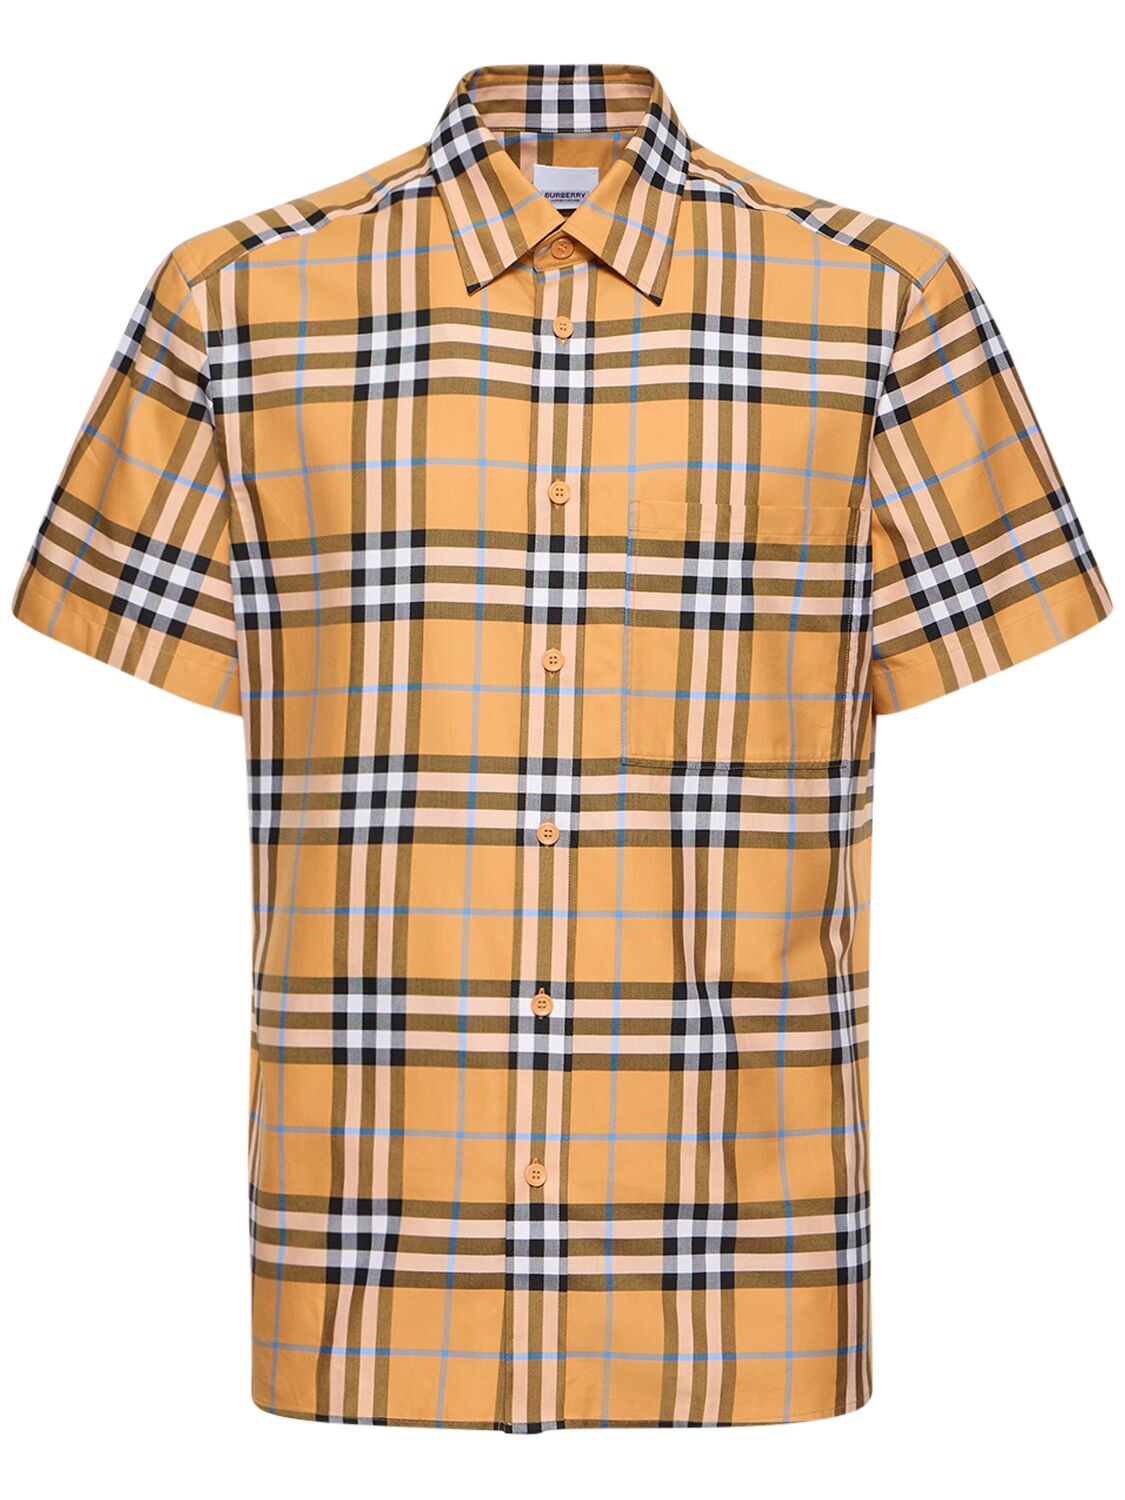 Image of Caxbridge Check Print Short Sleeve Shirt